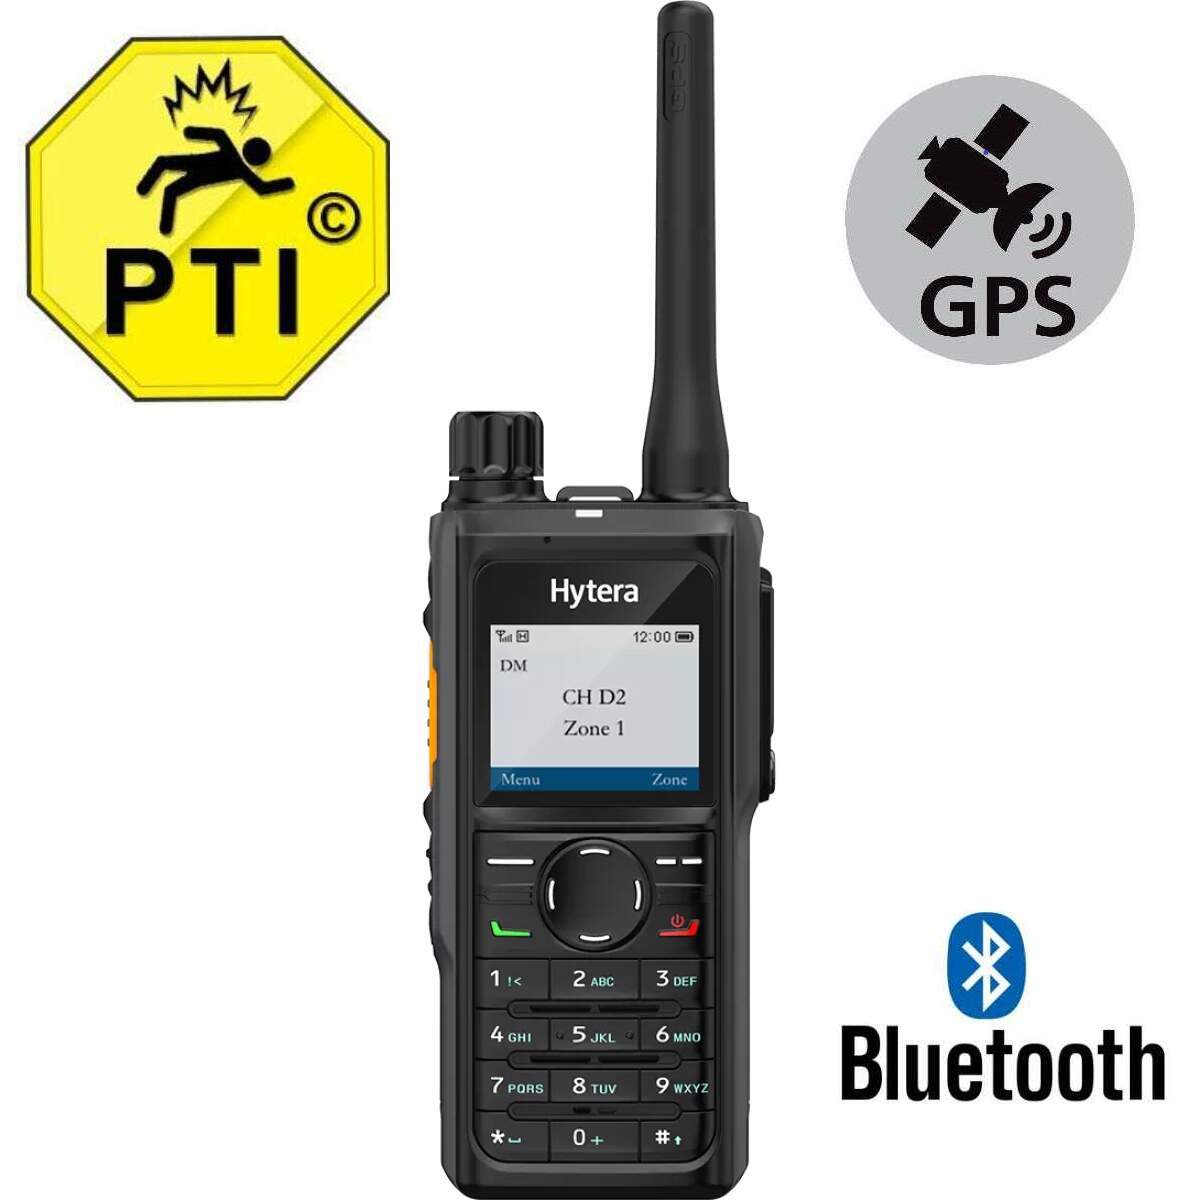 Hytera HP685 UHF - PTI Bluetooth GPS image